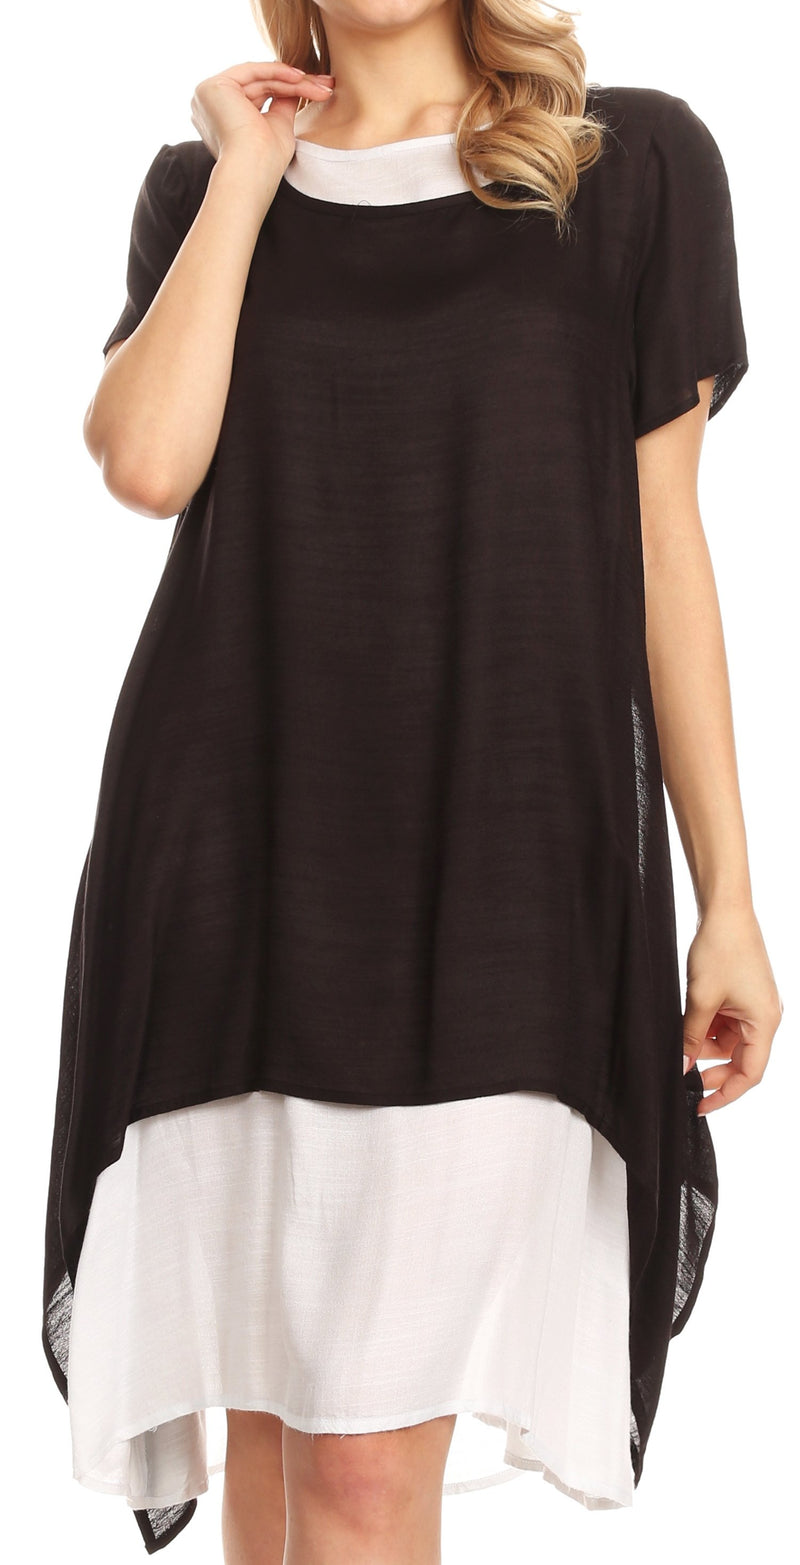 Sakkas Arina Midi Double Layered Short Sleeve Dress Solid with Pockets